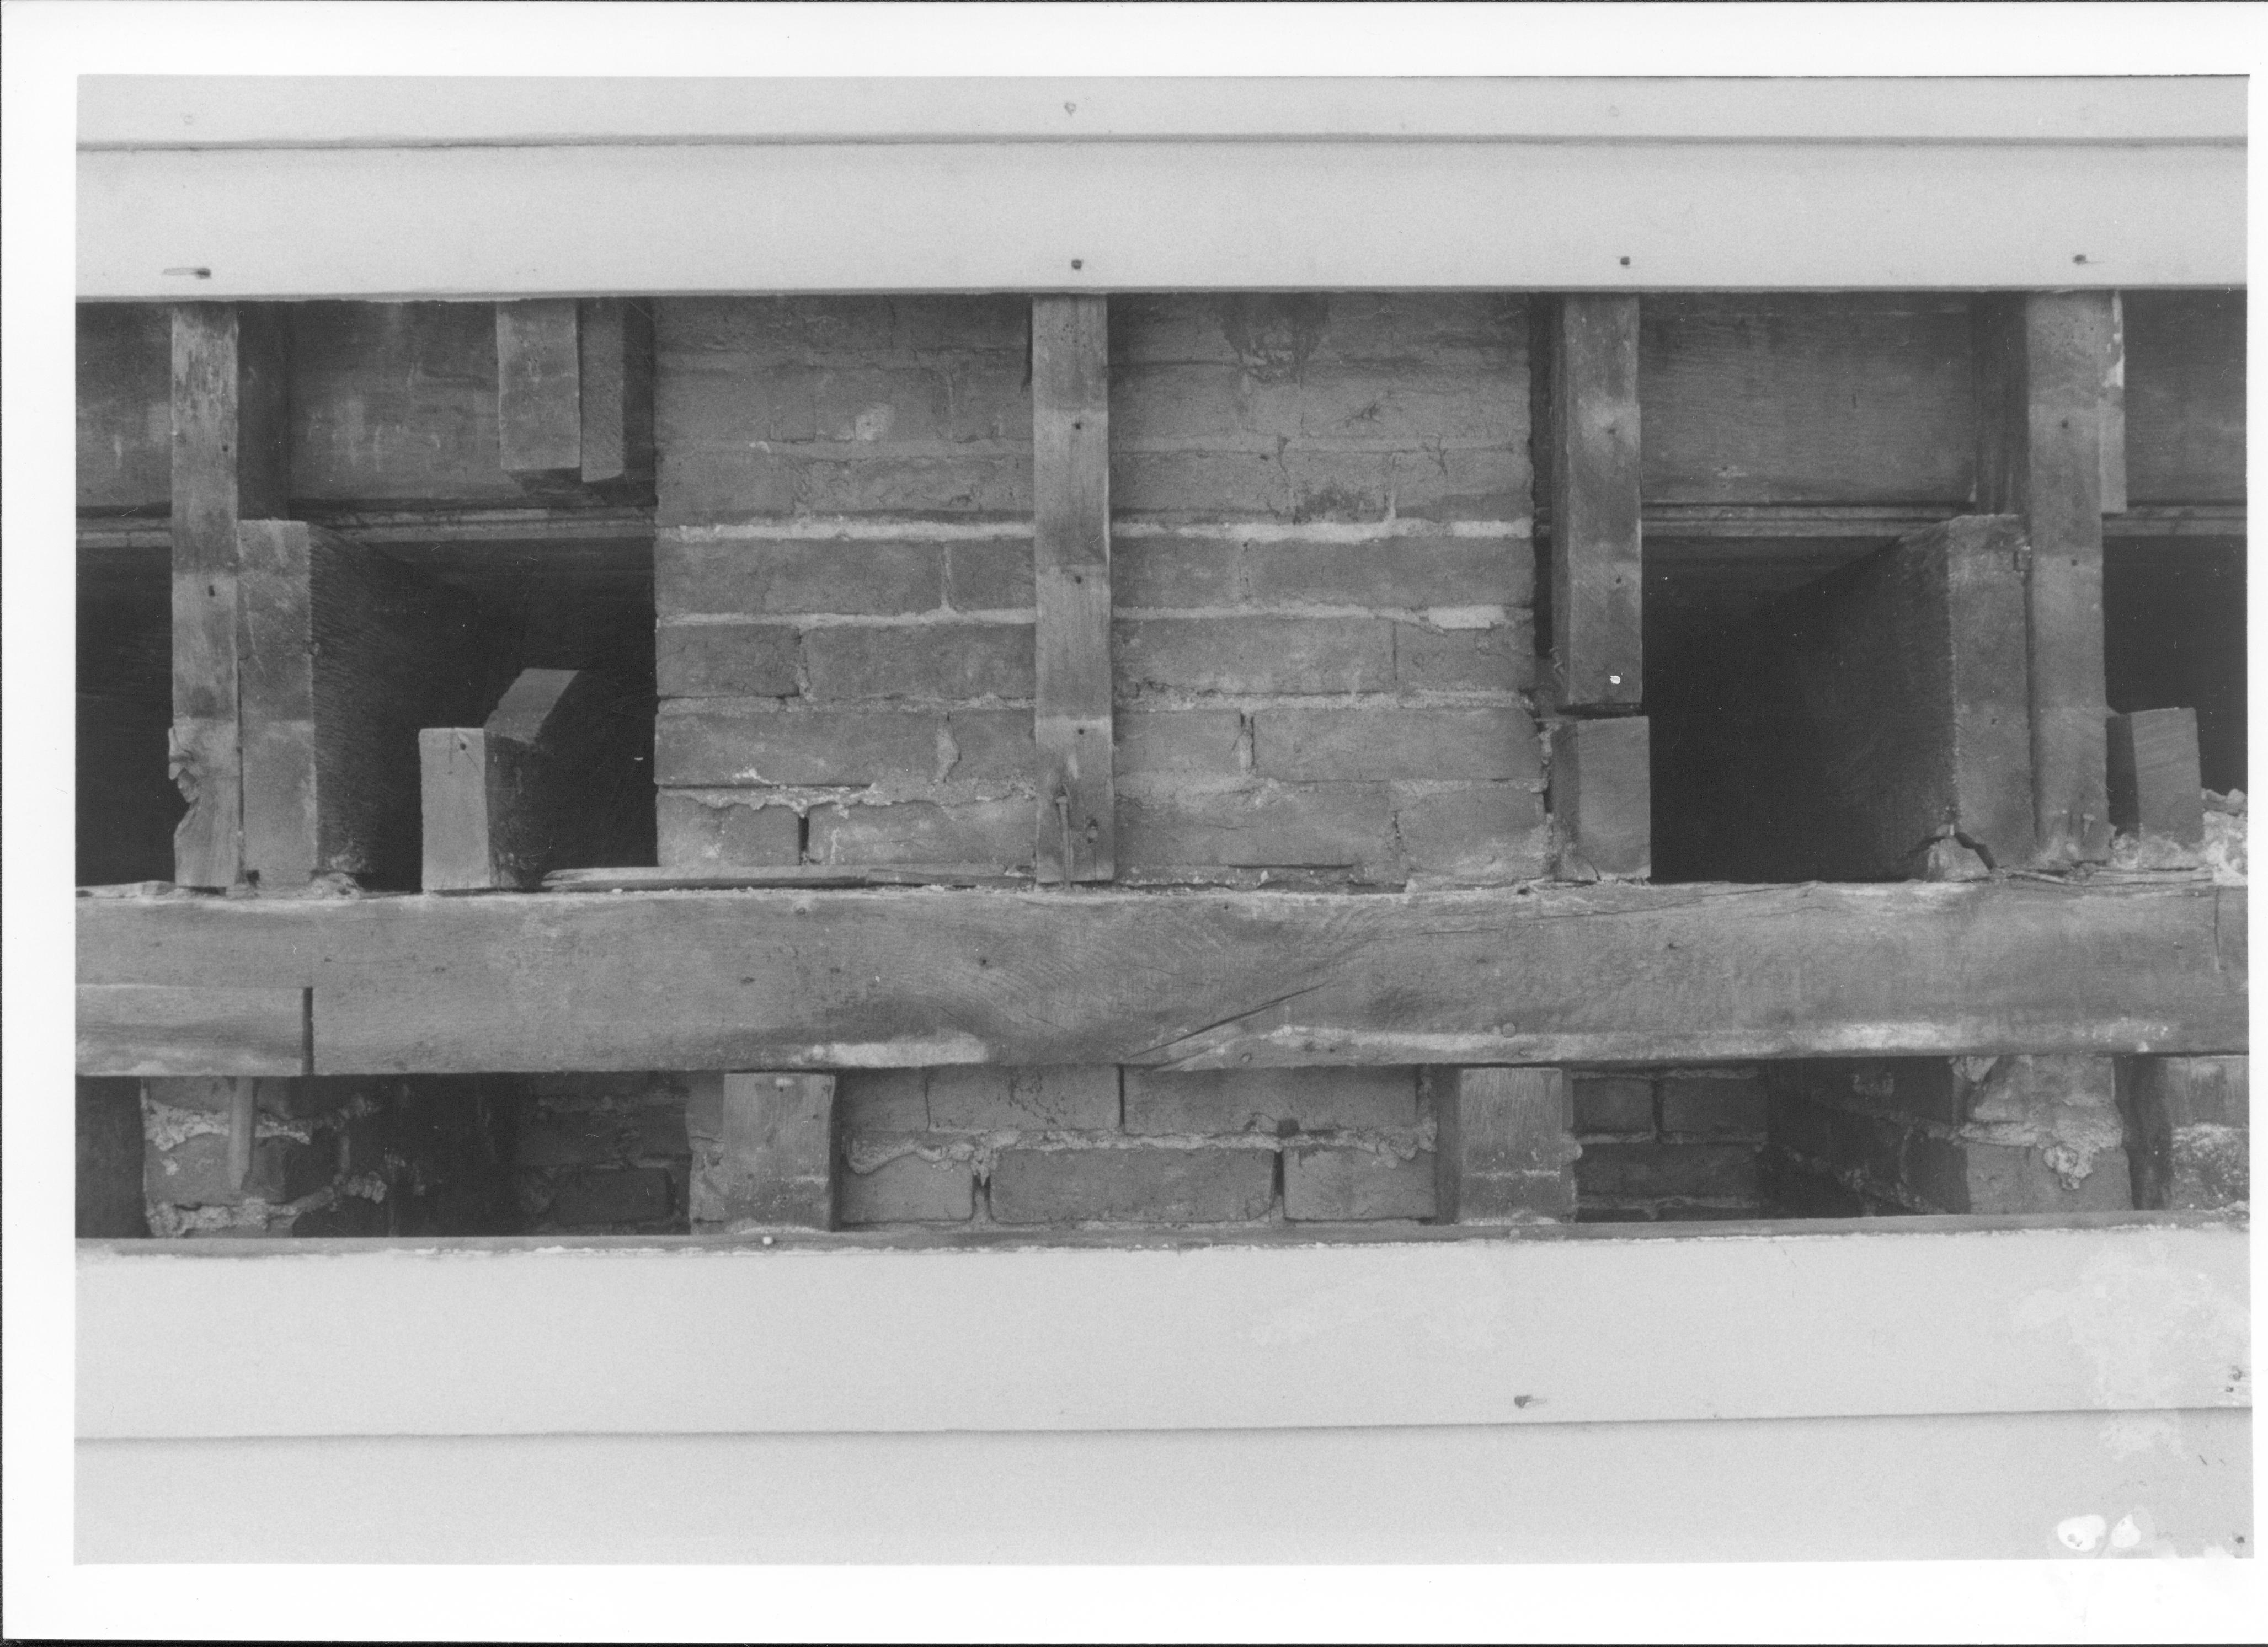 NA Lincoln Home NHS- miscellaneous media, 5 brickwork, restoration, siding